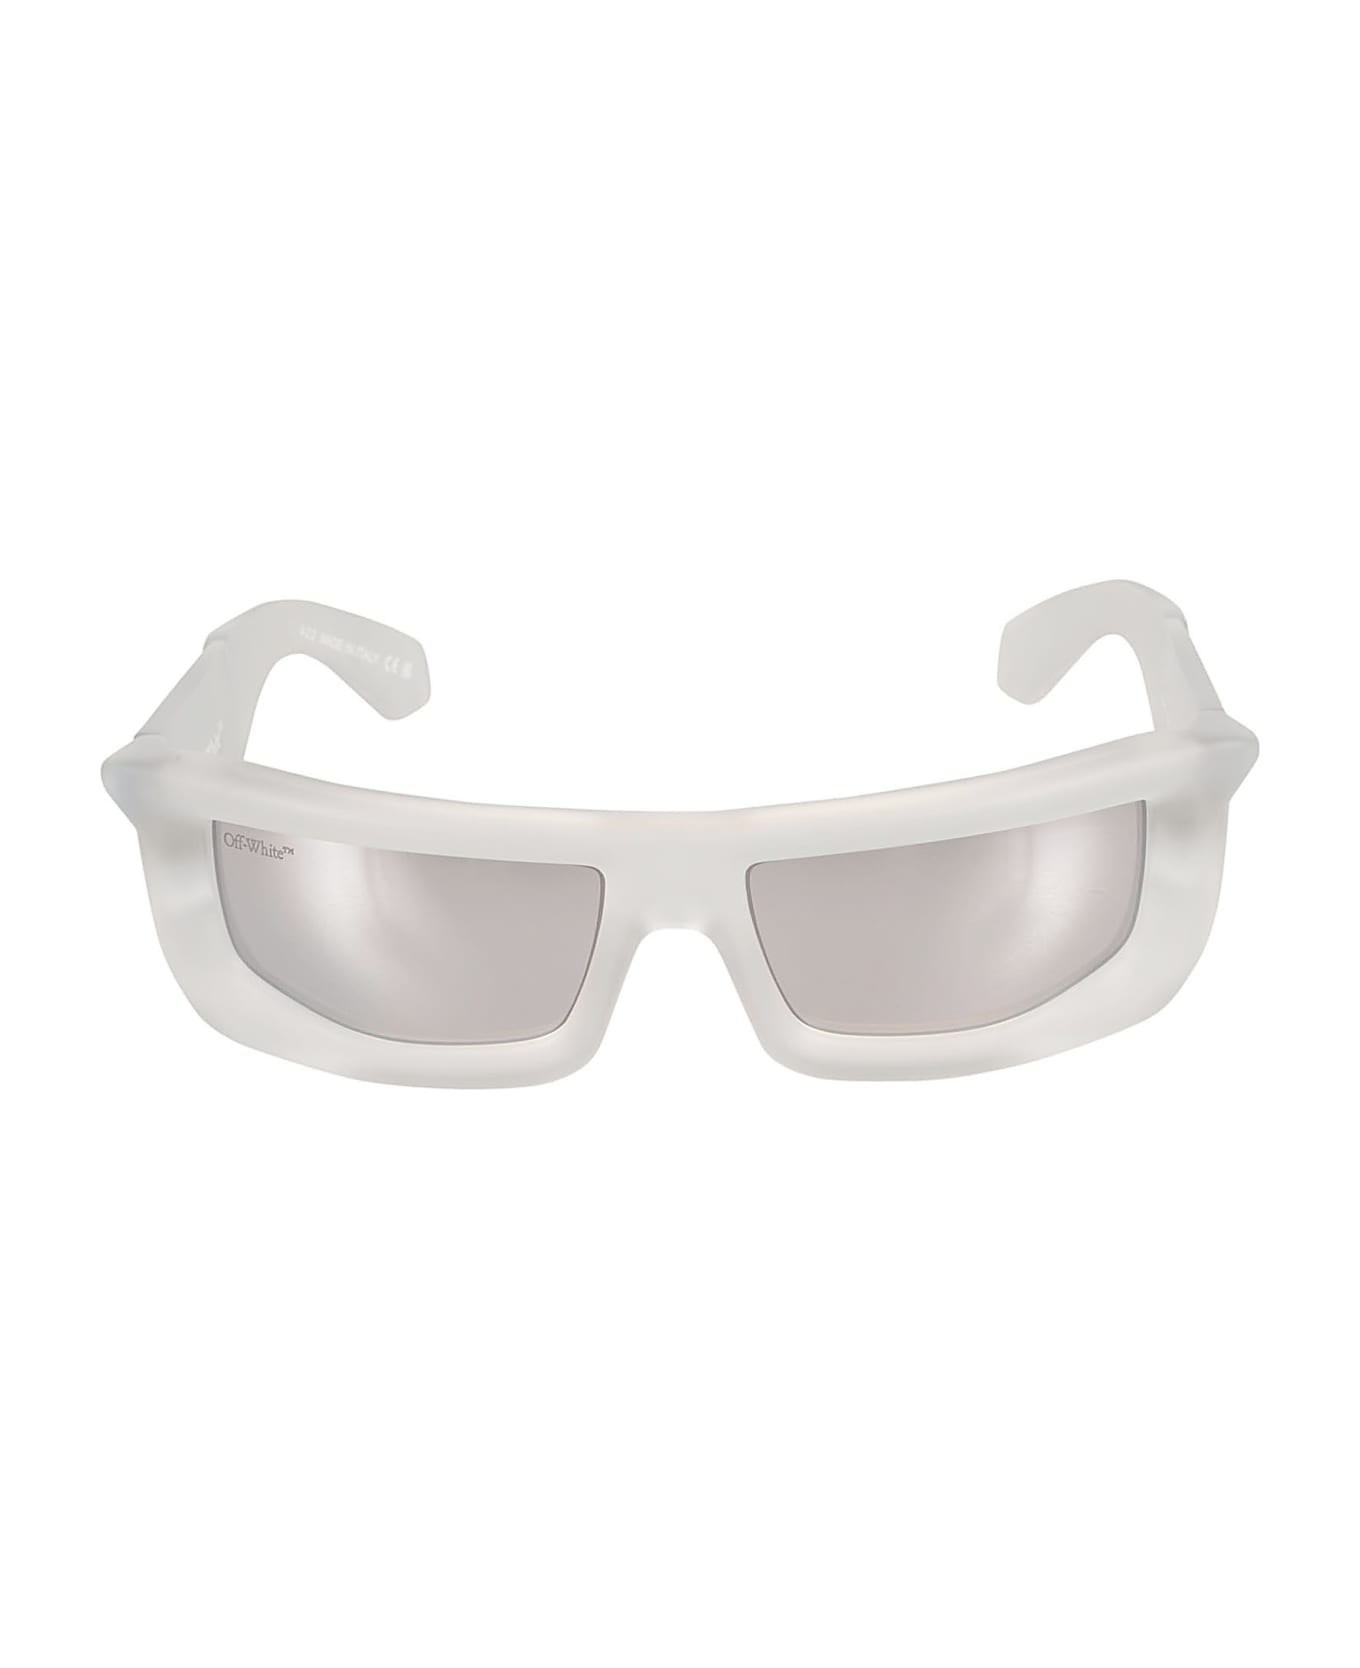 Off-White Volcanite Sunglasses - Argento サングラス